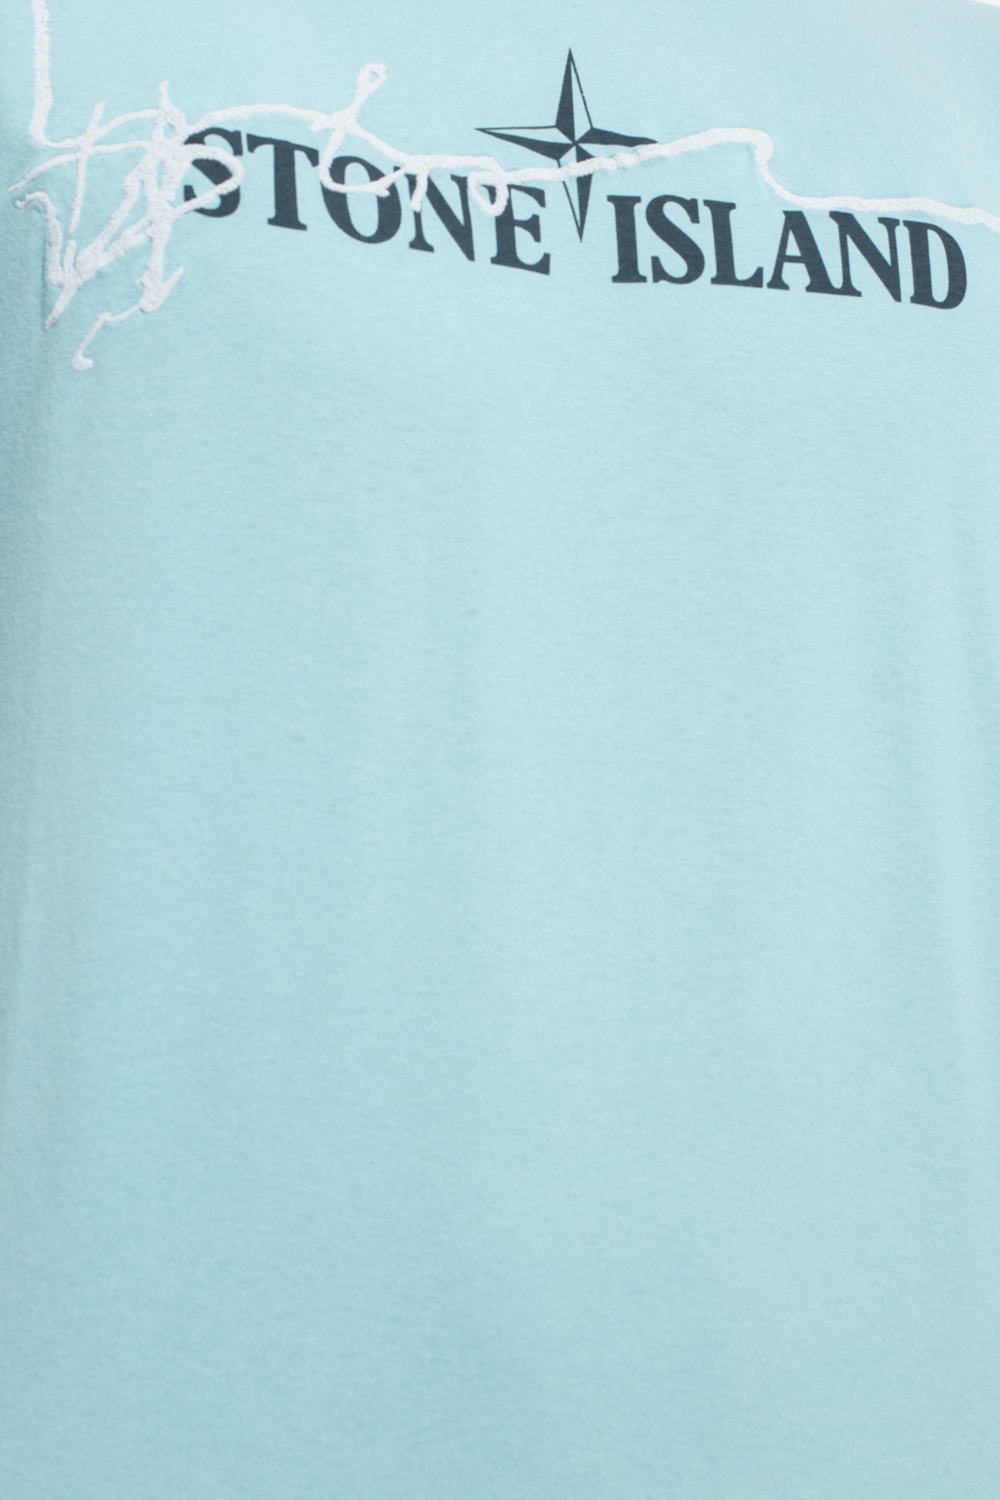 Stone Island reverse logo-print slim T-shirt